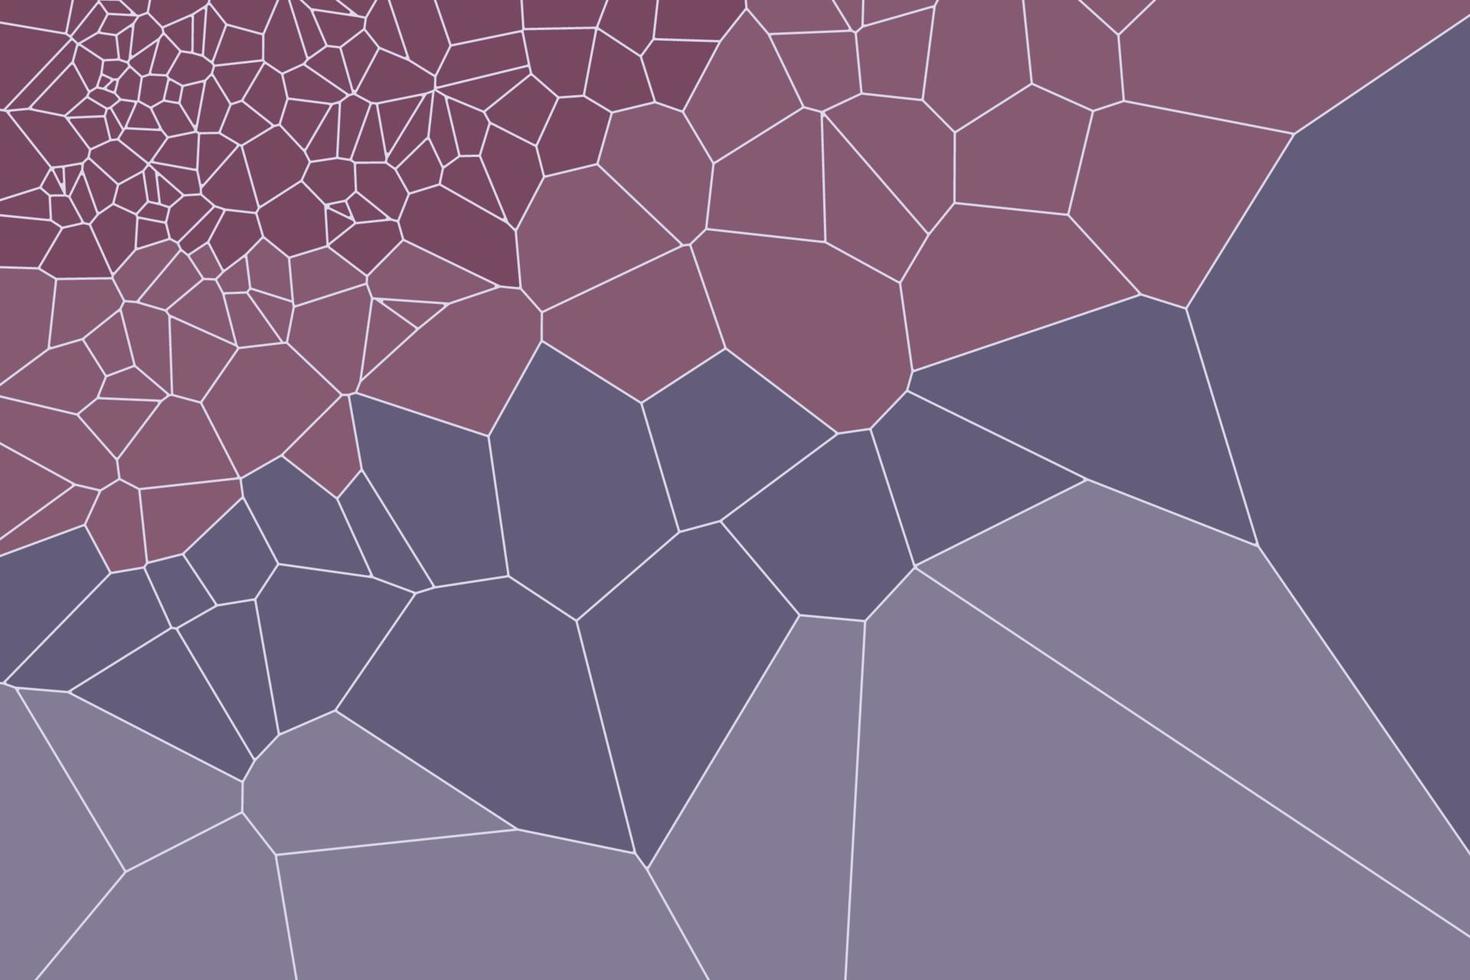 abstrakt mörk violett voronoi diagram bakgrund. flerfärgade oregelbundna geometriska mönsterfigurer vektor